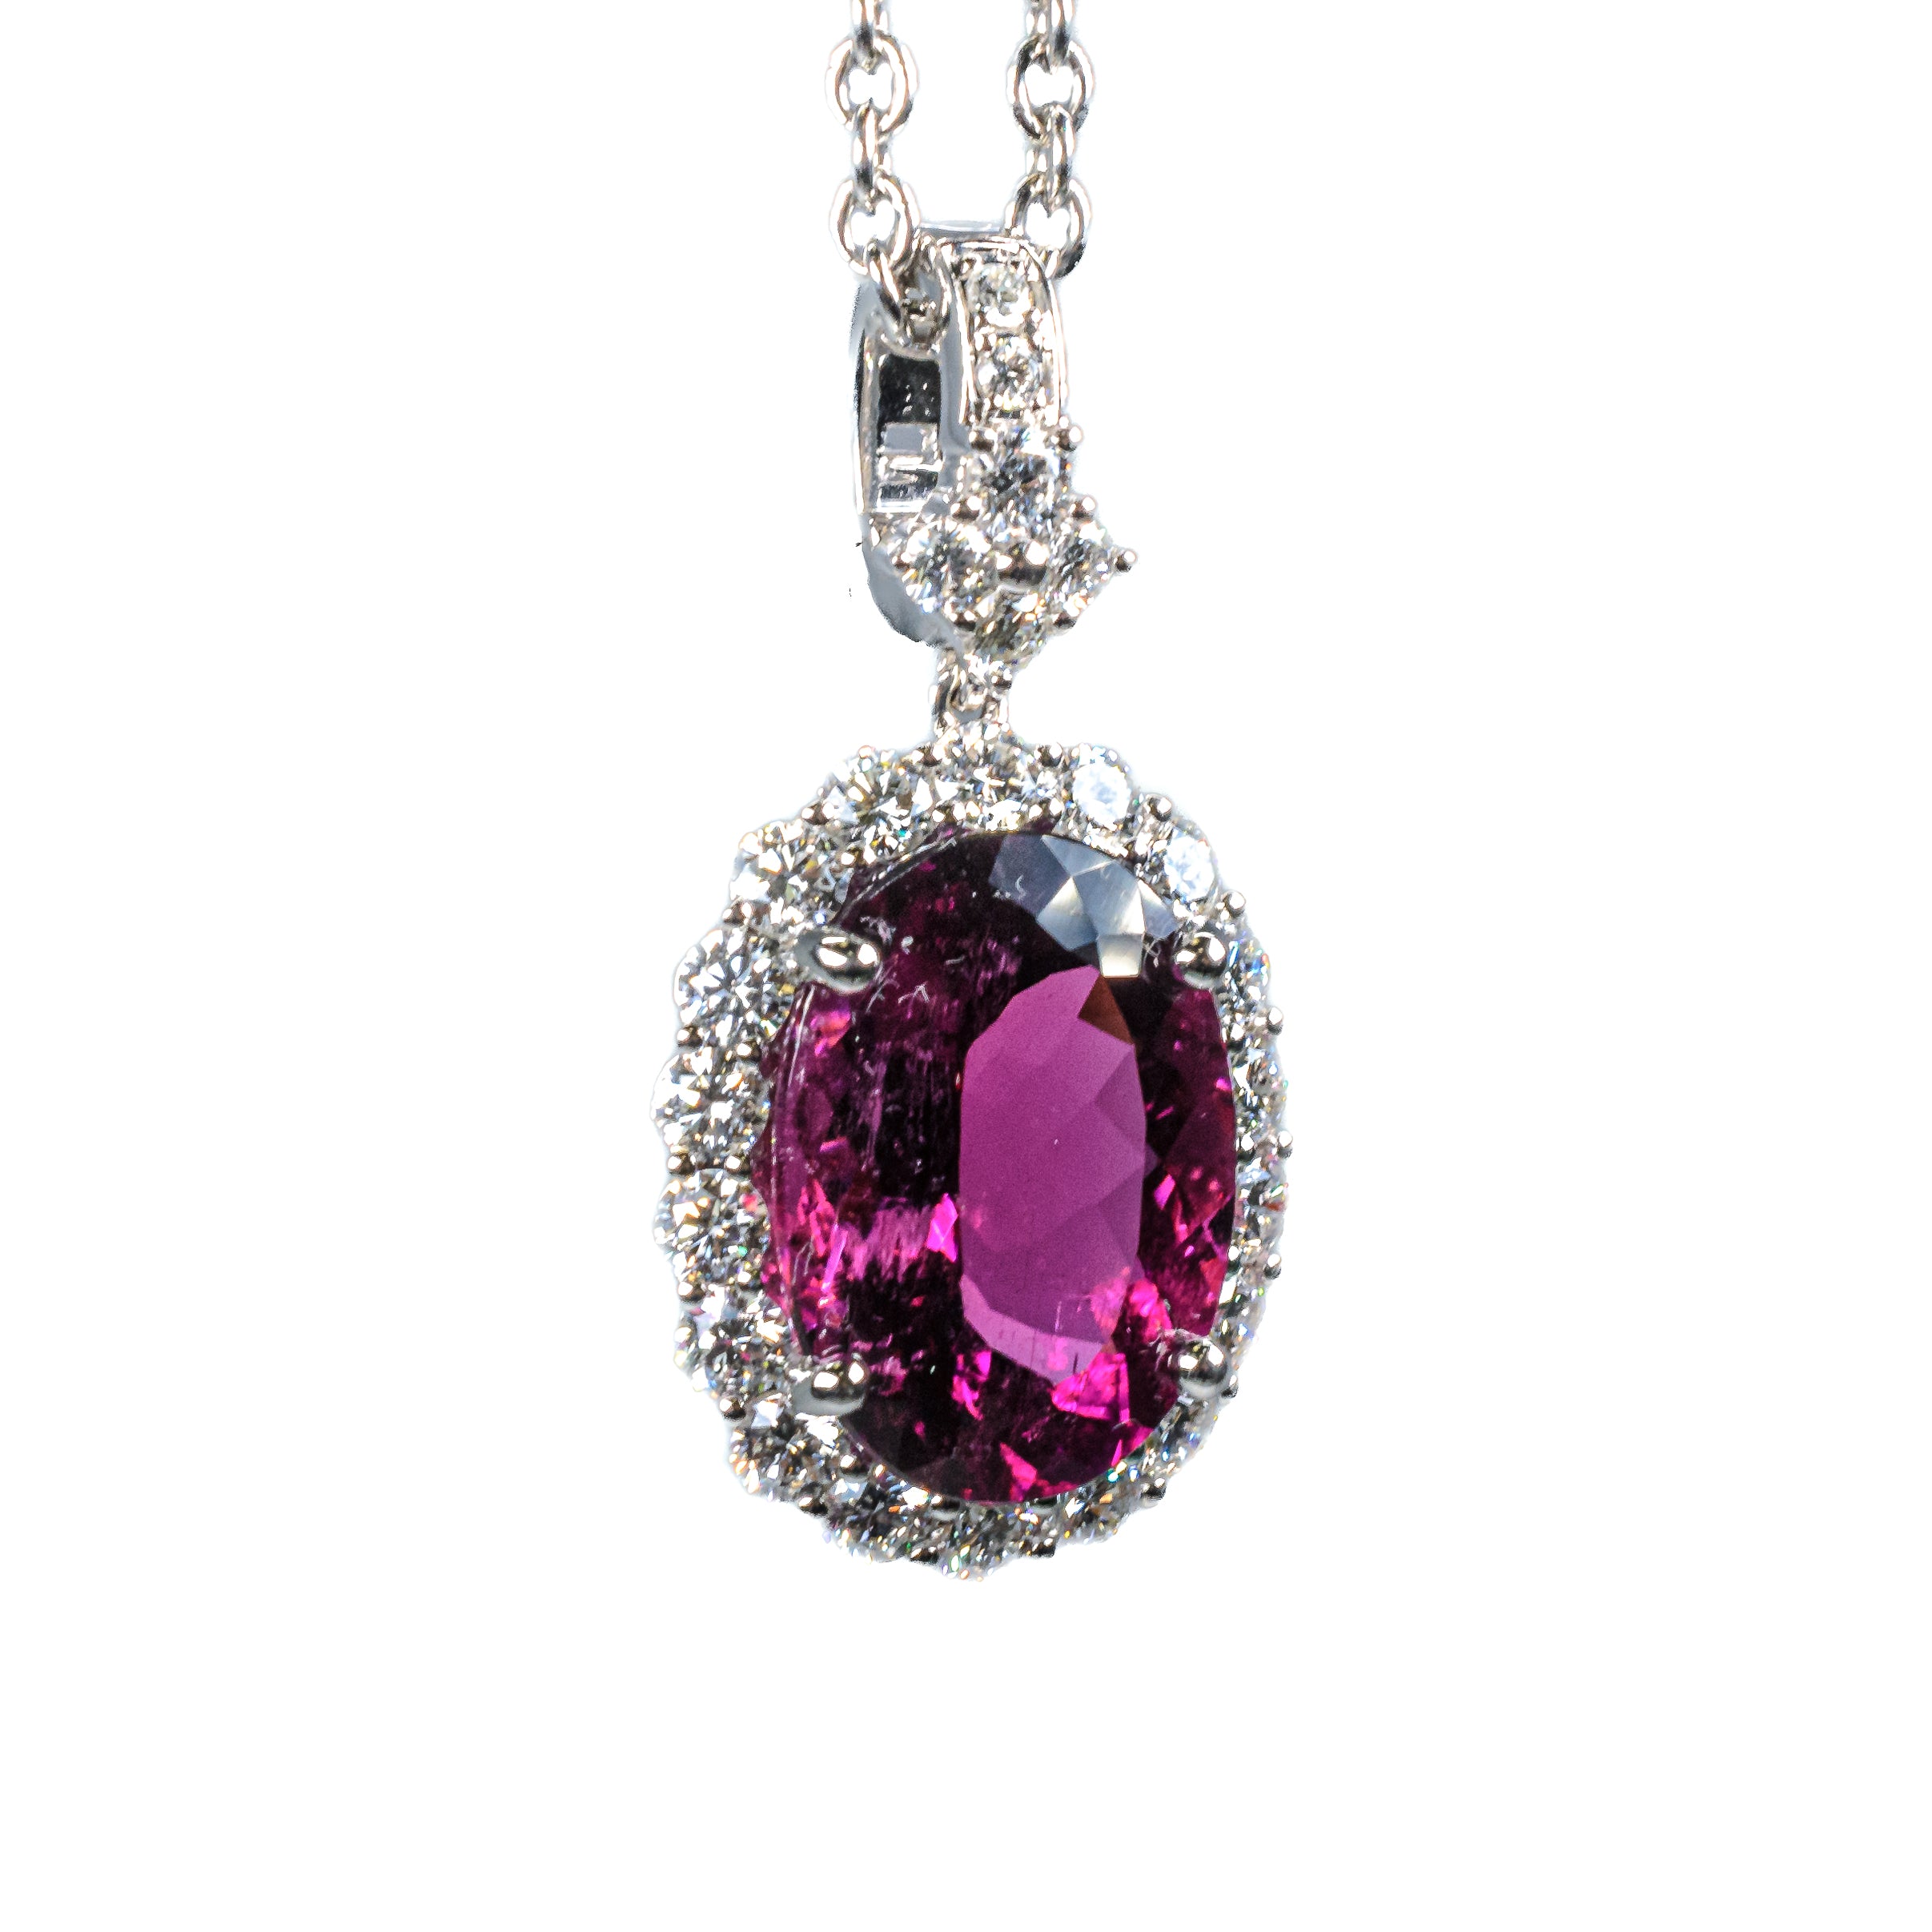 18kt White Gold 9.13ct Pink Tourmaline & Diamond Necklace